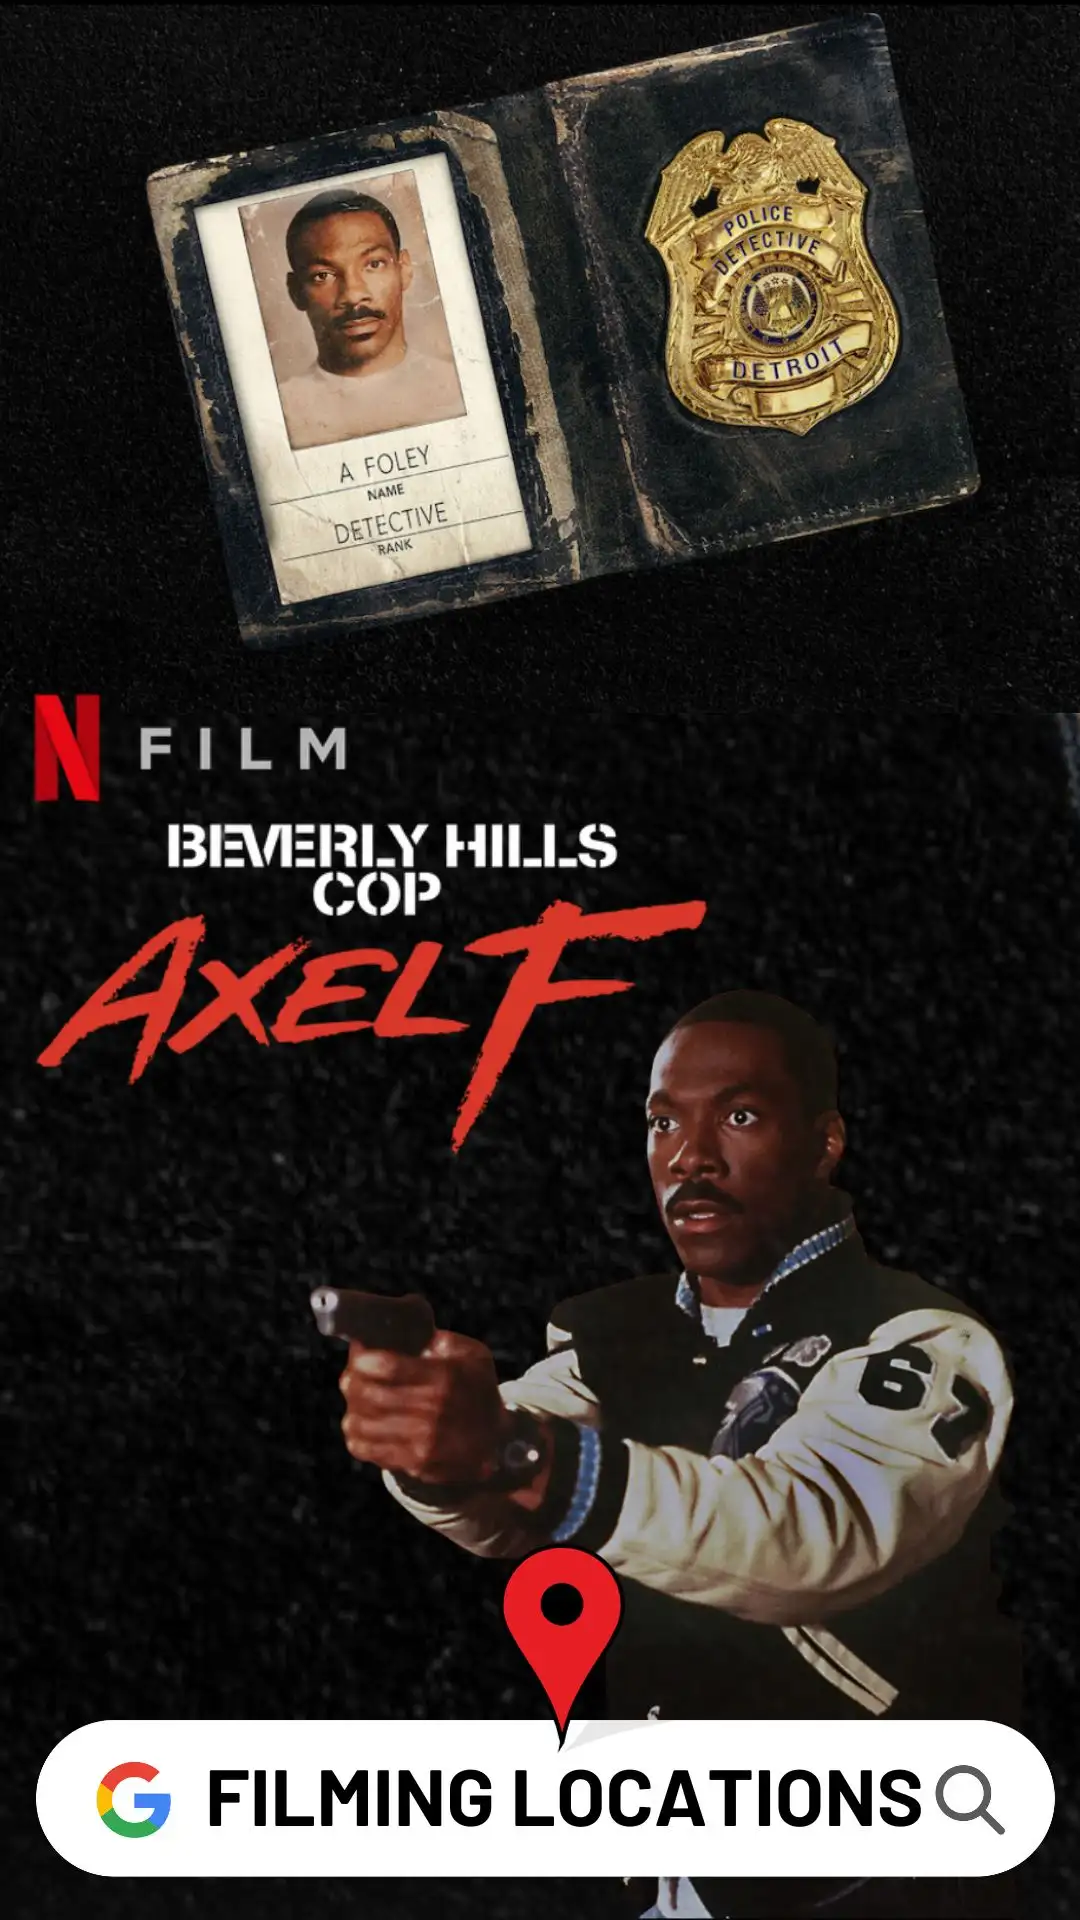 Beverly Hills Cop Axel F Filming Locations.webp